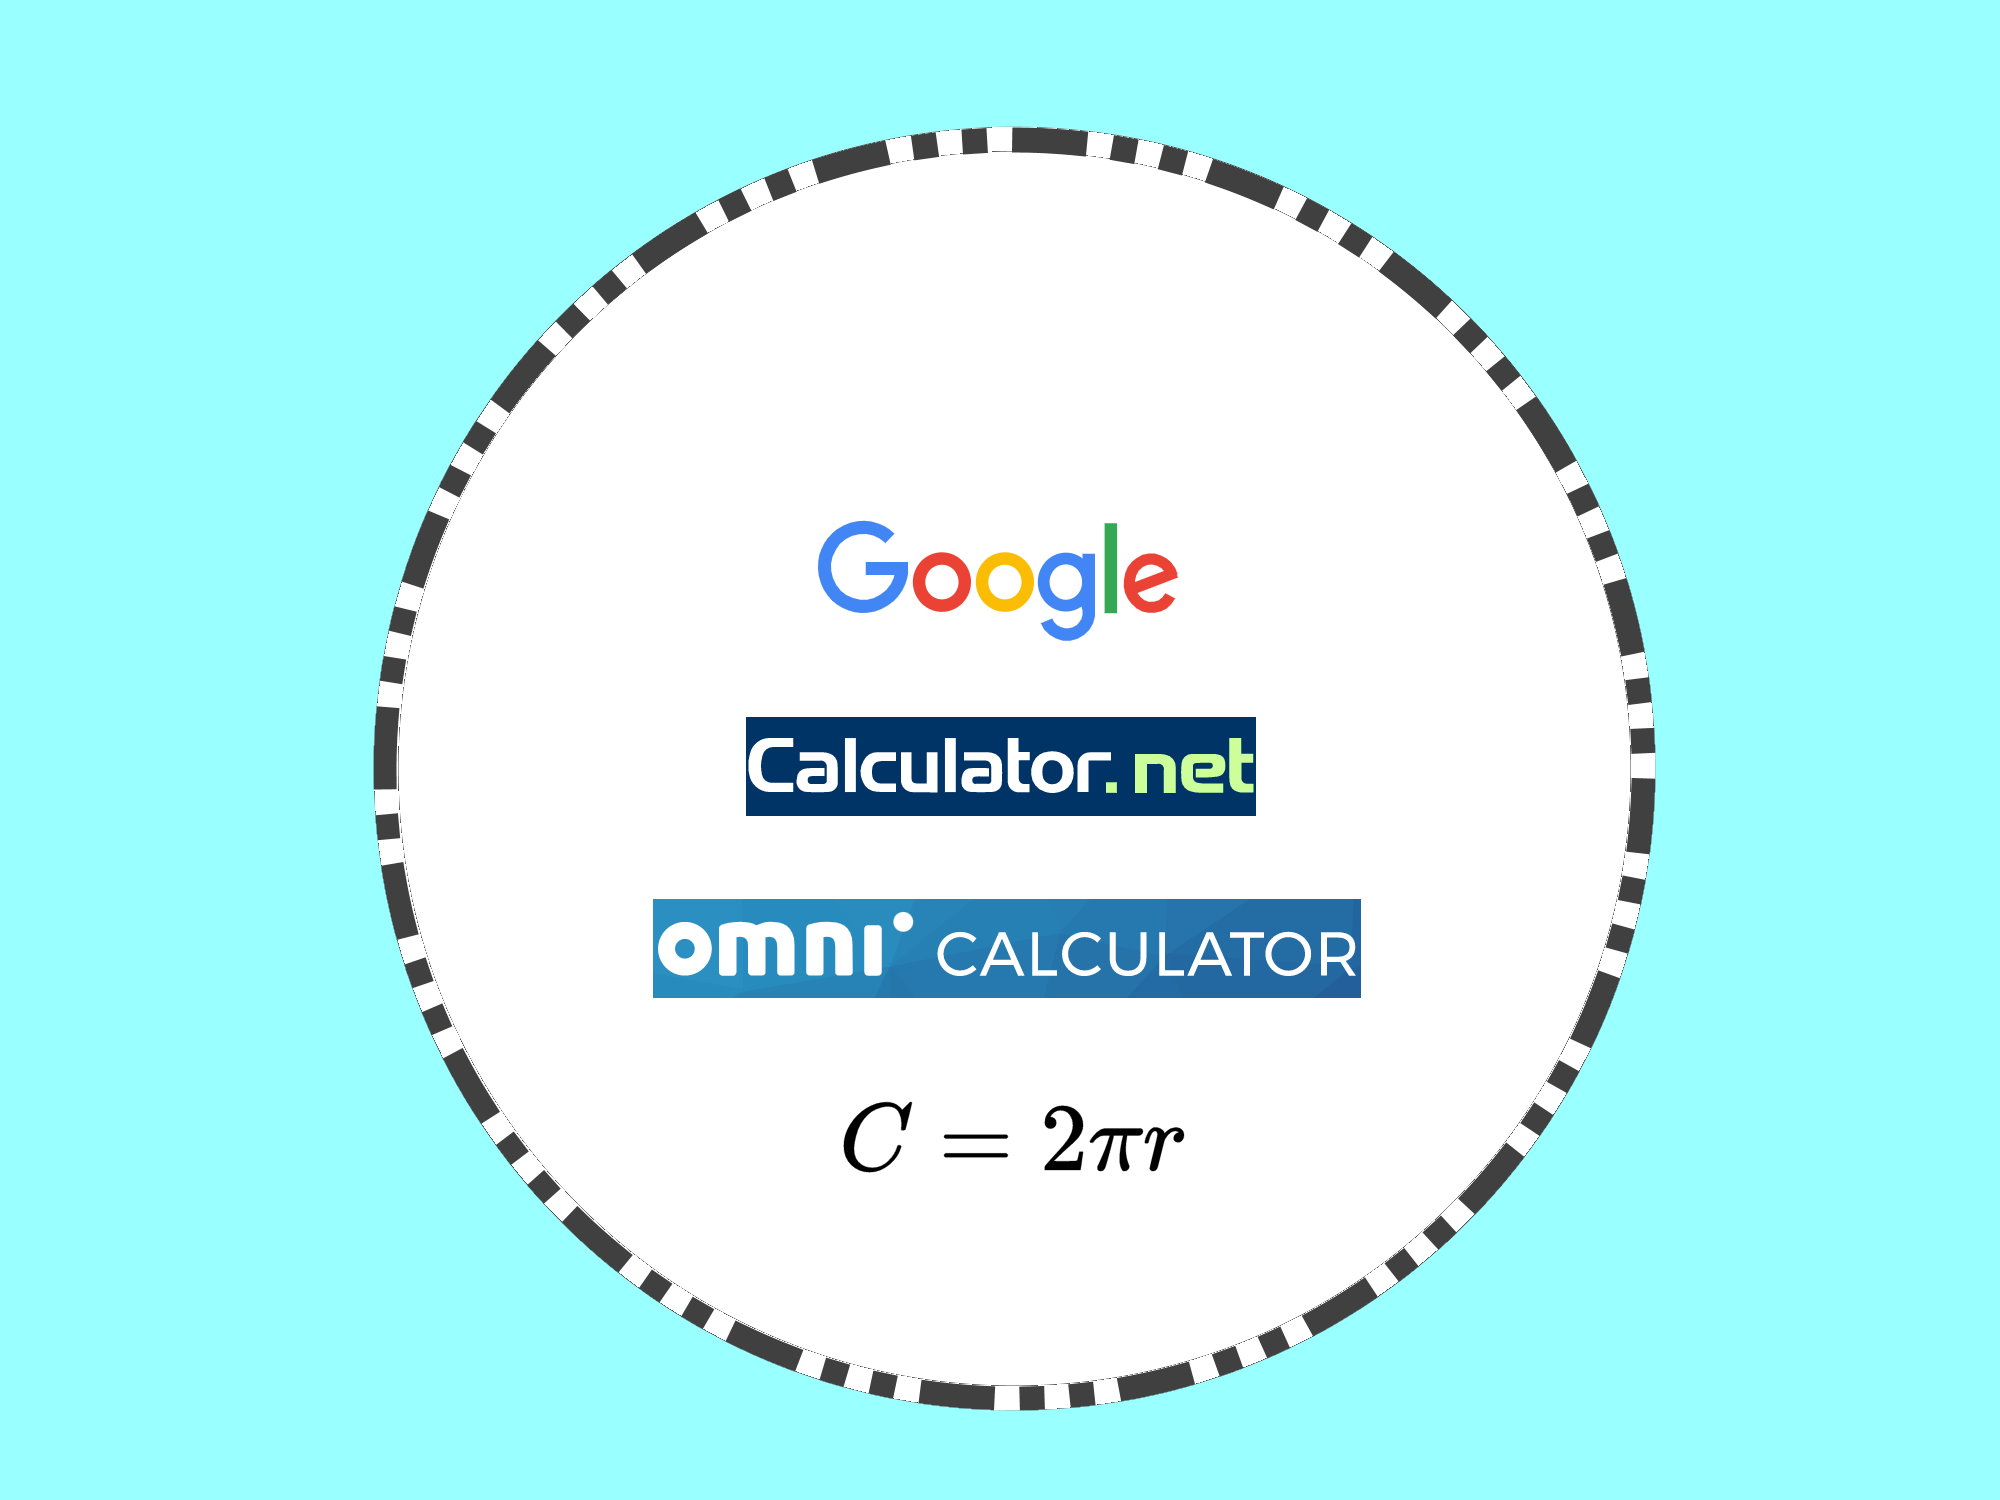 Omni calculator